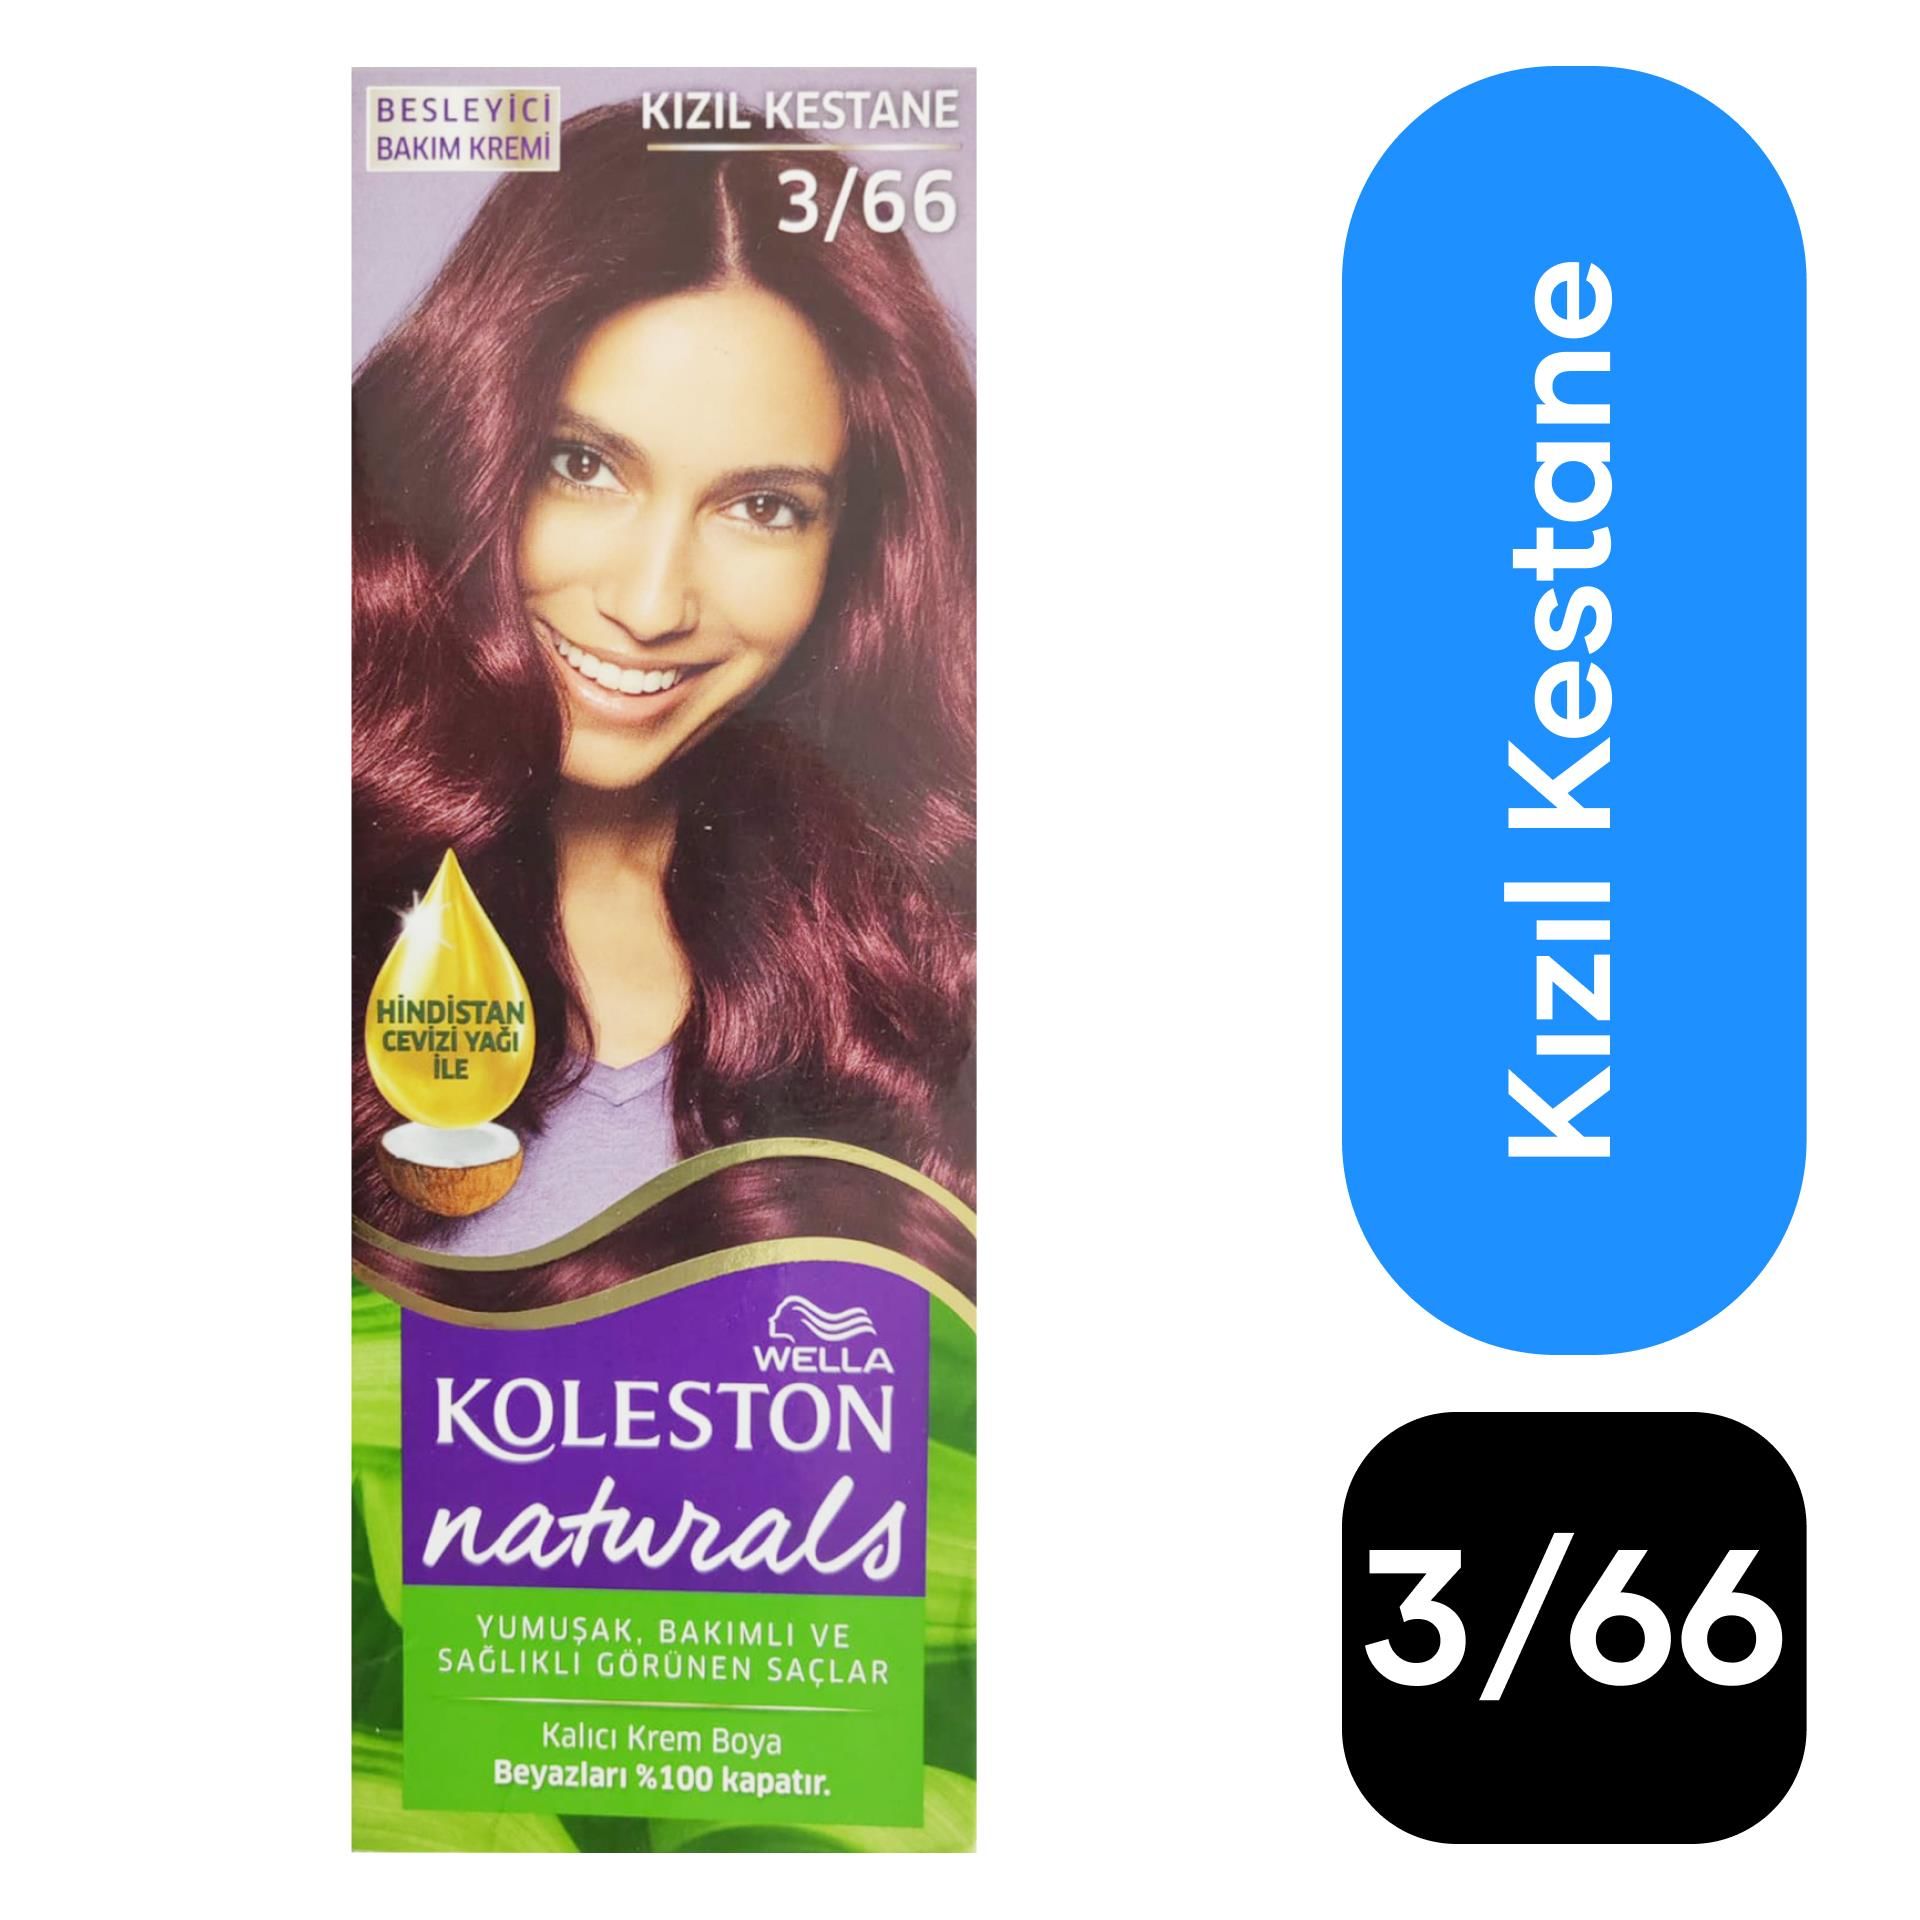 Koleston Saç Boyası Naturals 3/66 Kızıl Kestane